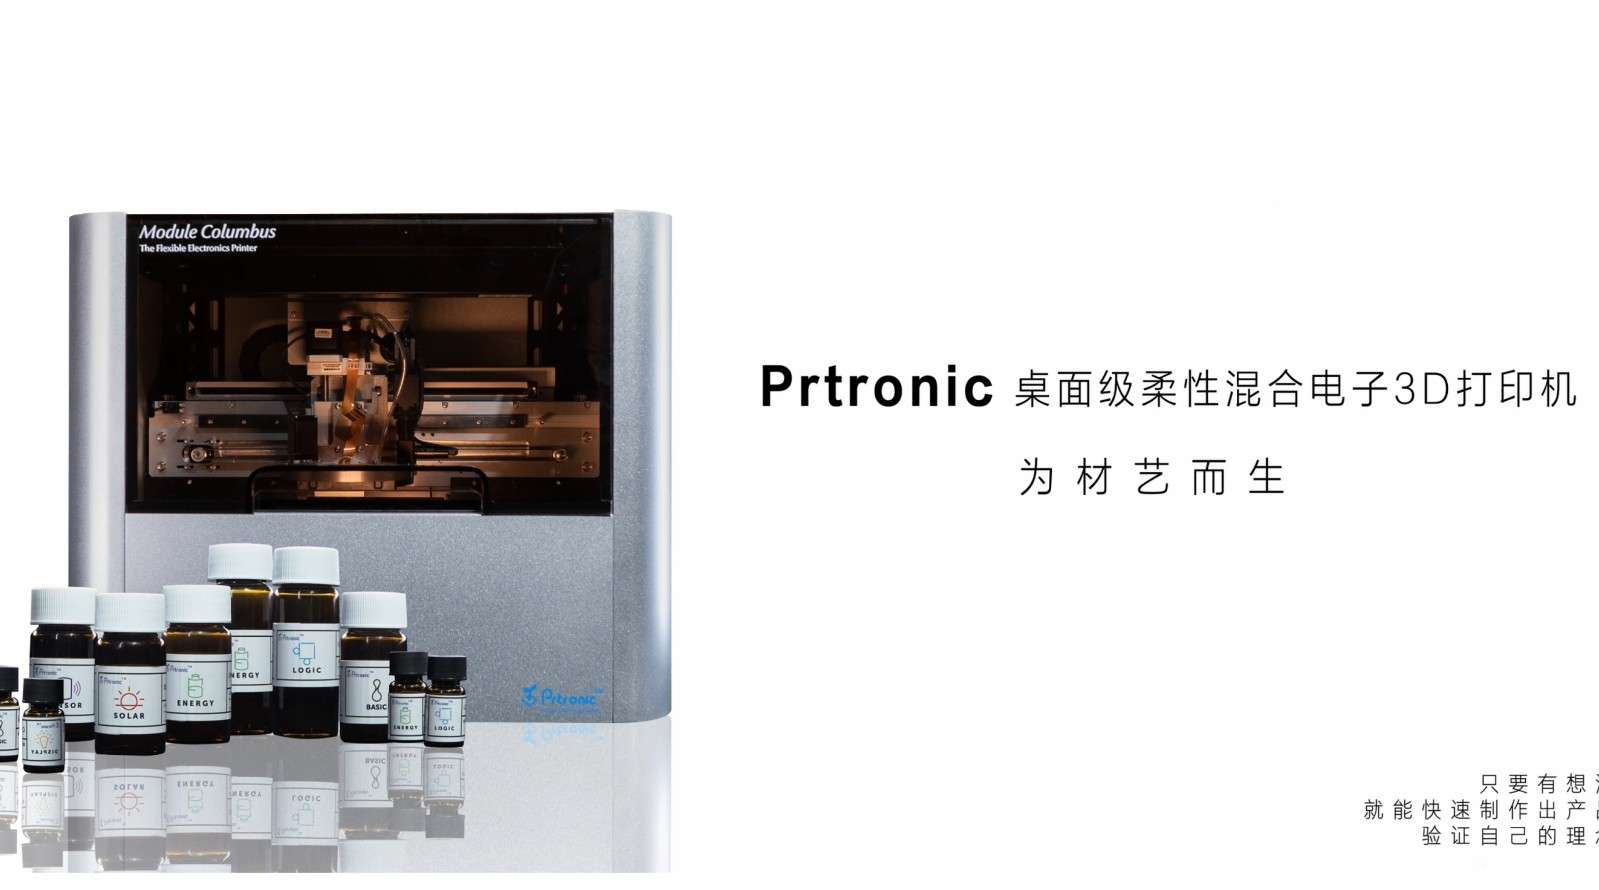 Prtronic 3D打印机产品宣传片